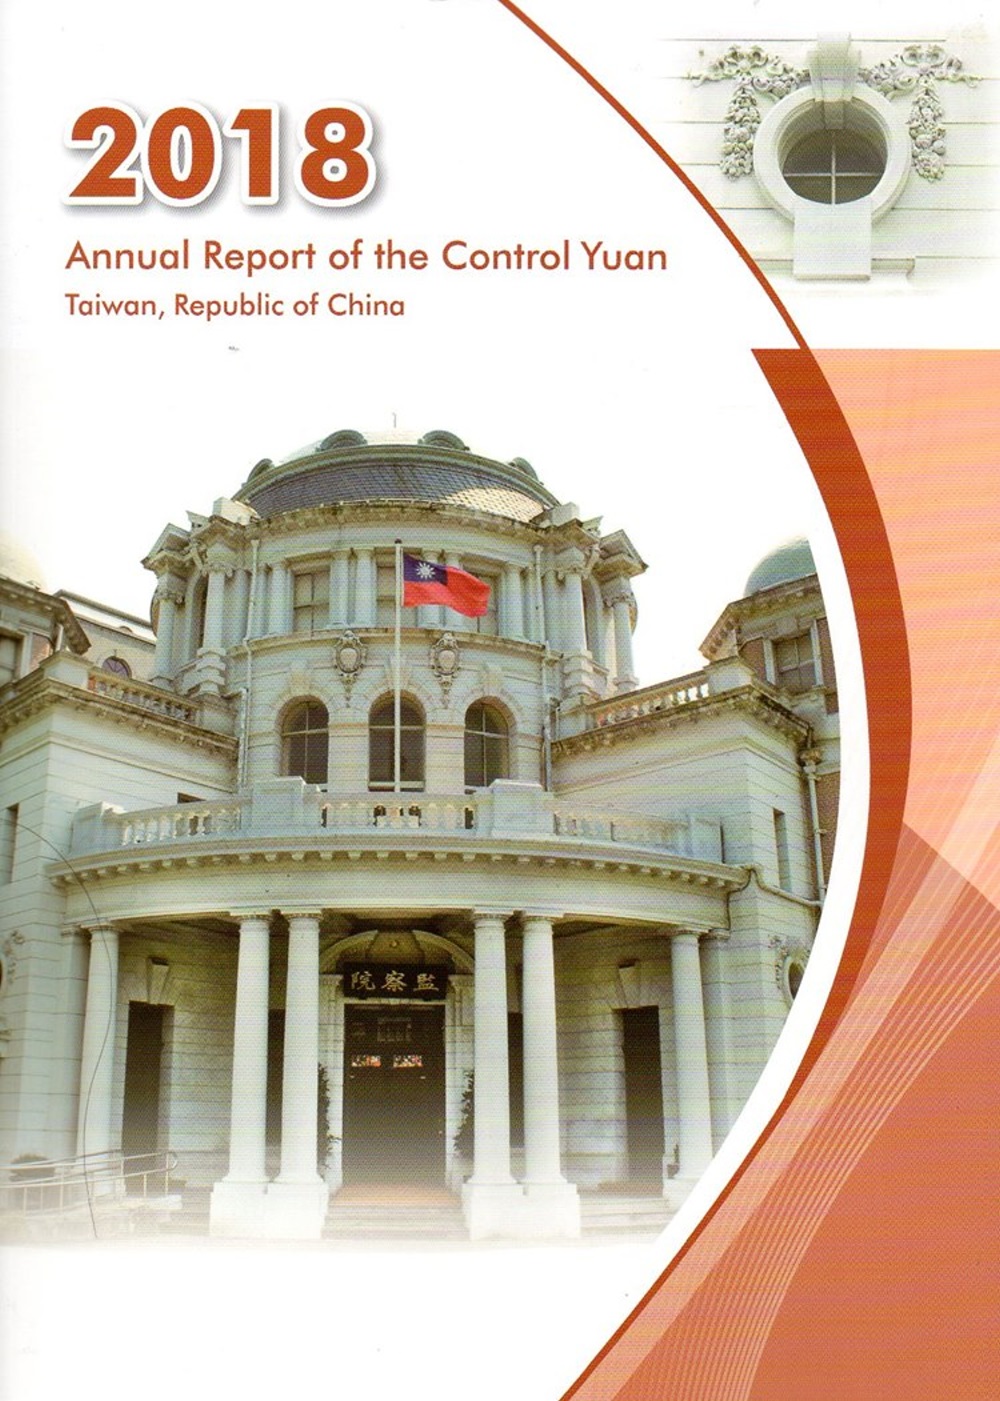 2018 Annual Report of the Control Yuan, Taiwan, R.O.C